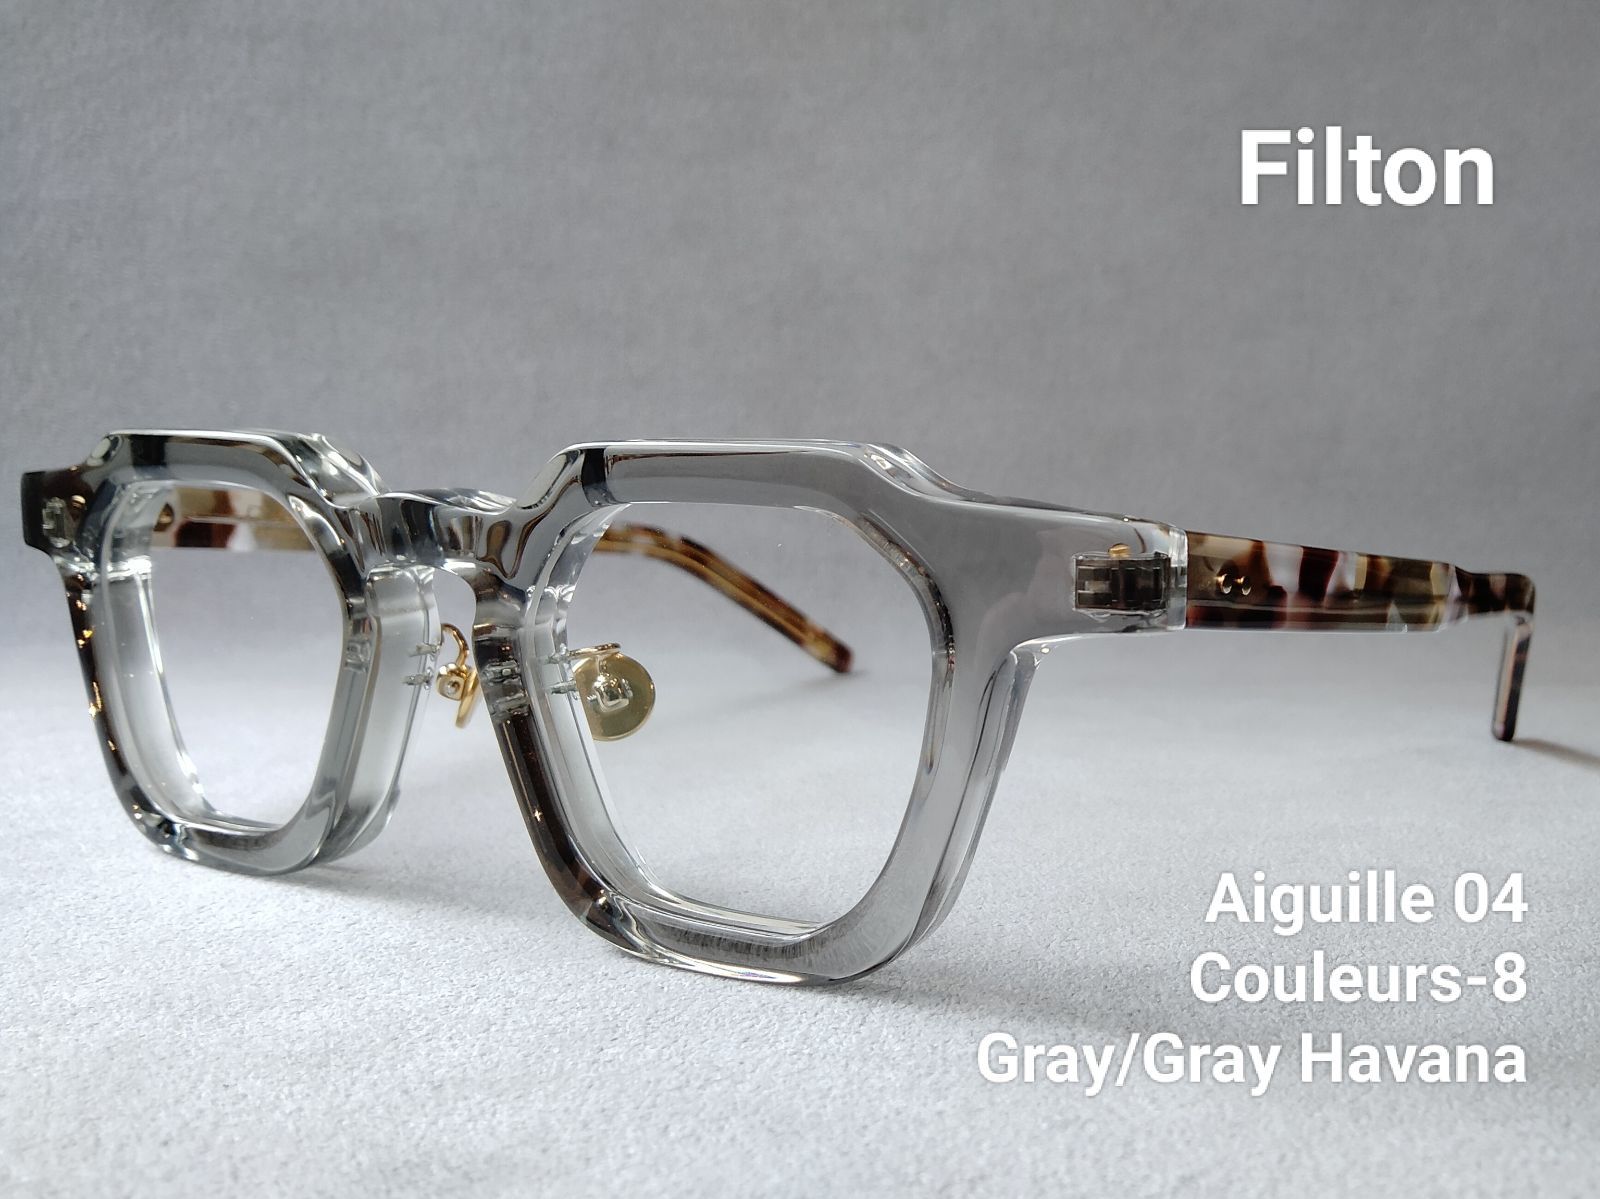 Filton(フィルトン)「Aiguille 04」Couleurs - 8/Gray-Gray Havana ...